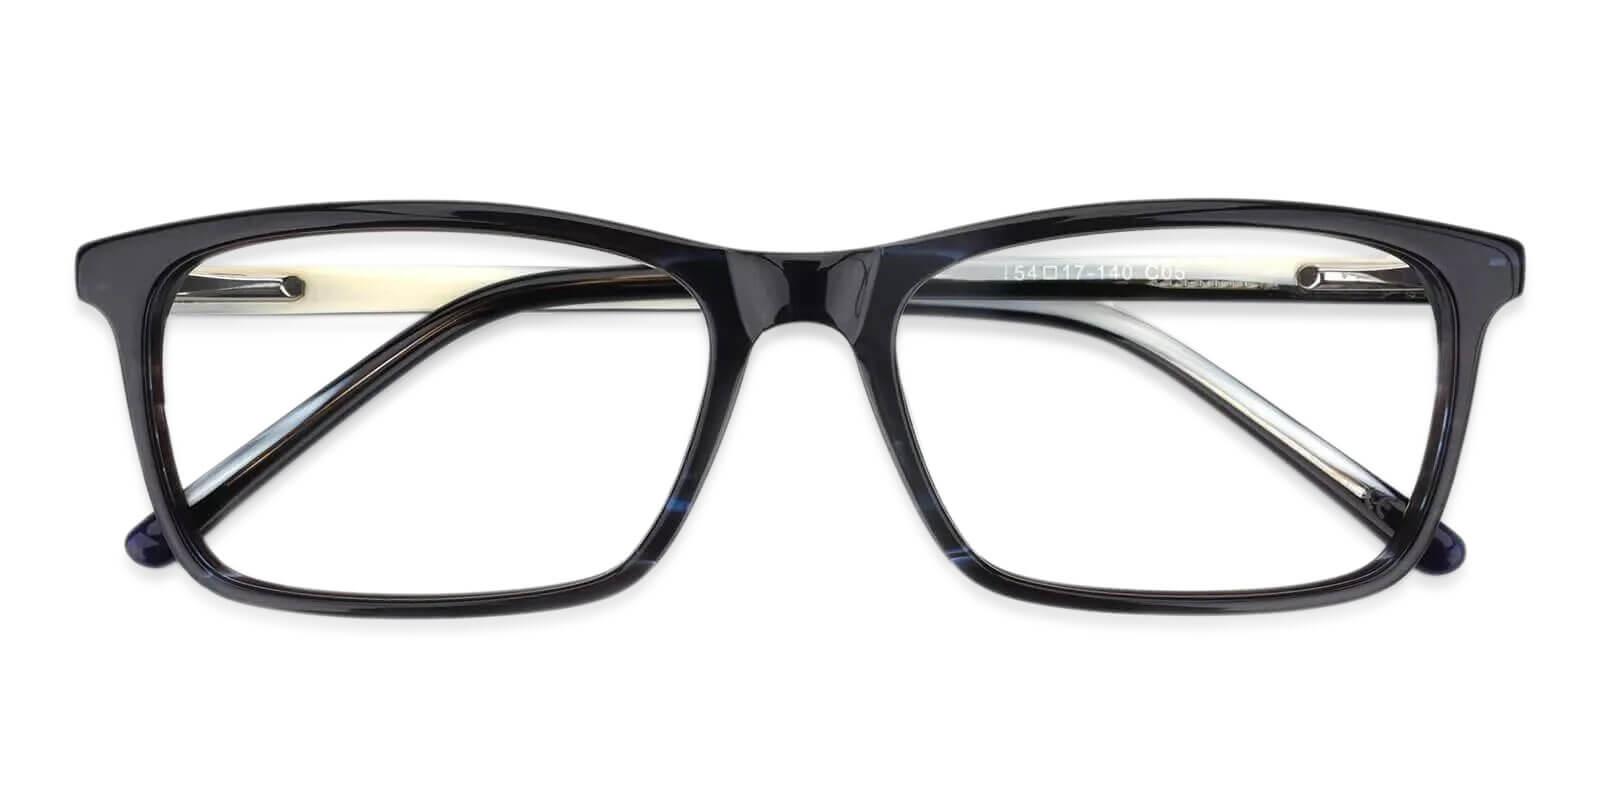 Quasqueton Striped Acetate Eyeglasses , SpringHinges , UniversalBridgeFit Frames from ABBE Glasses